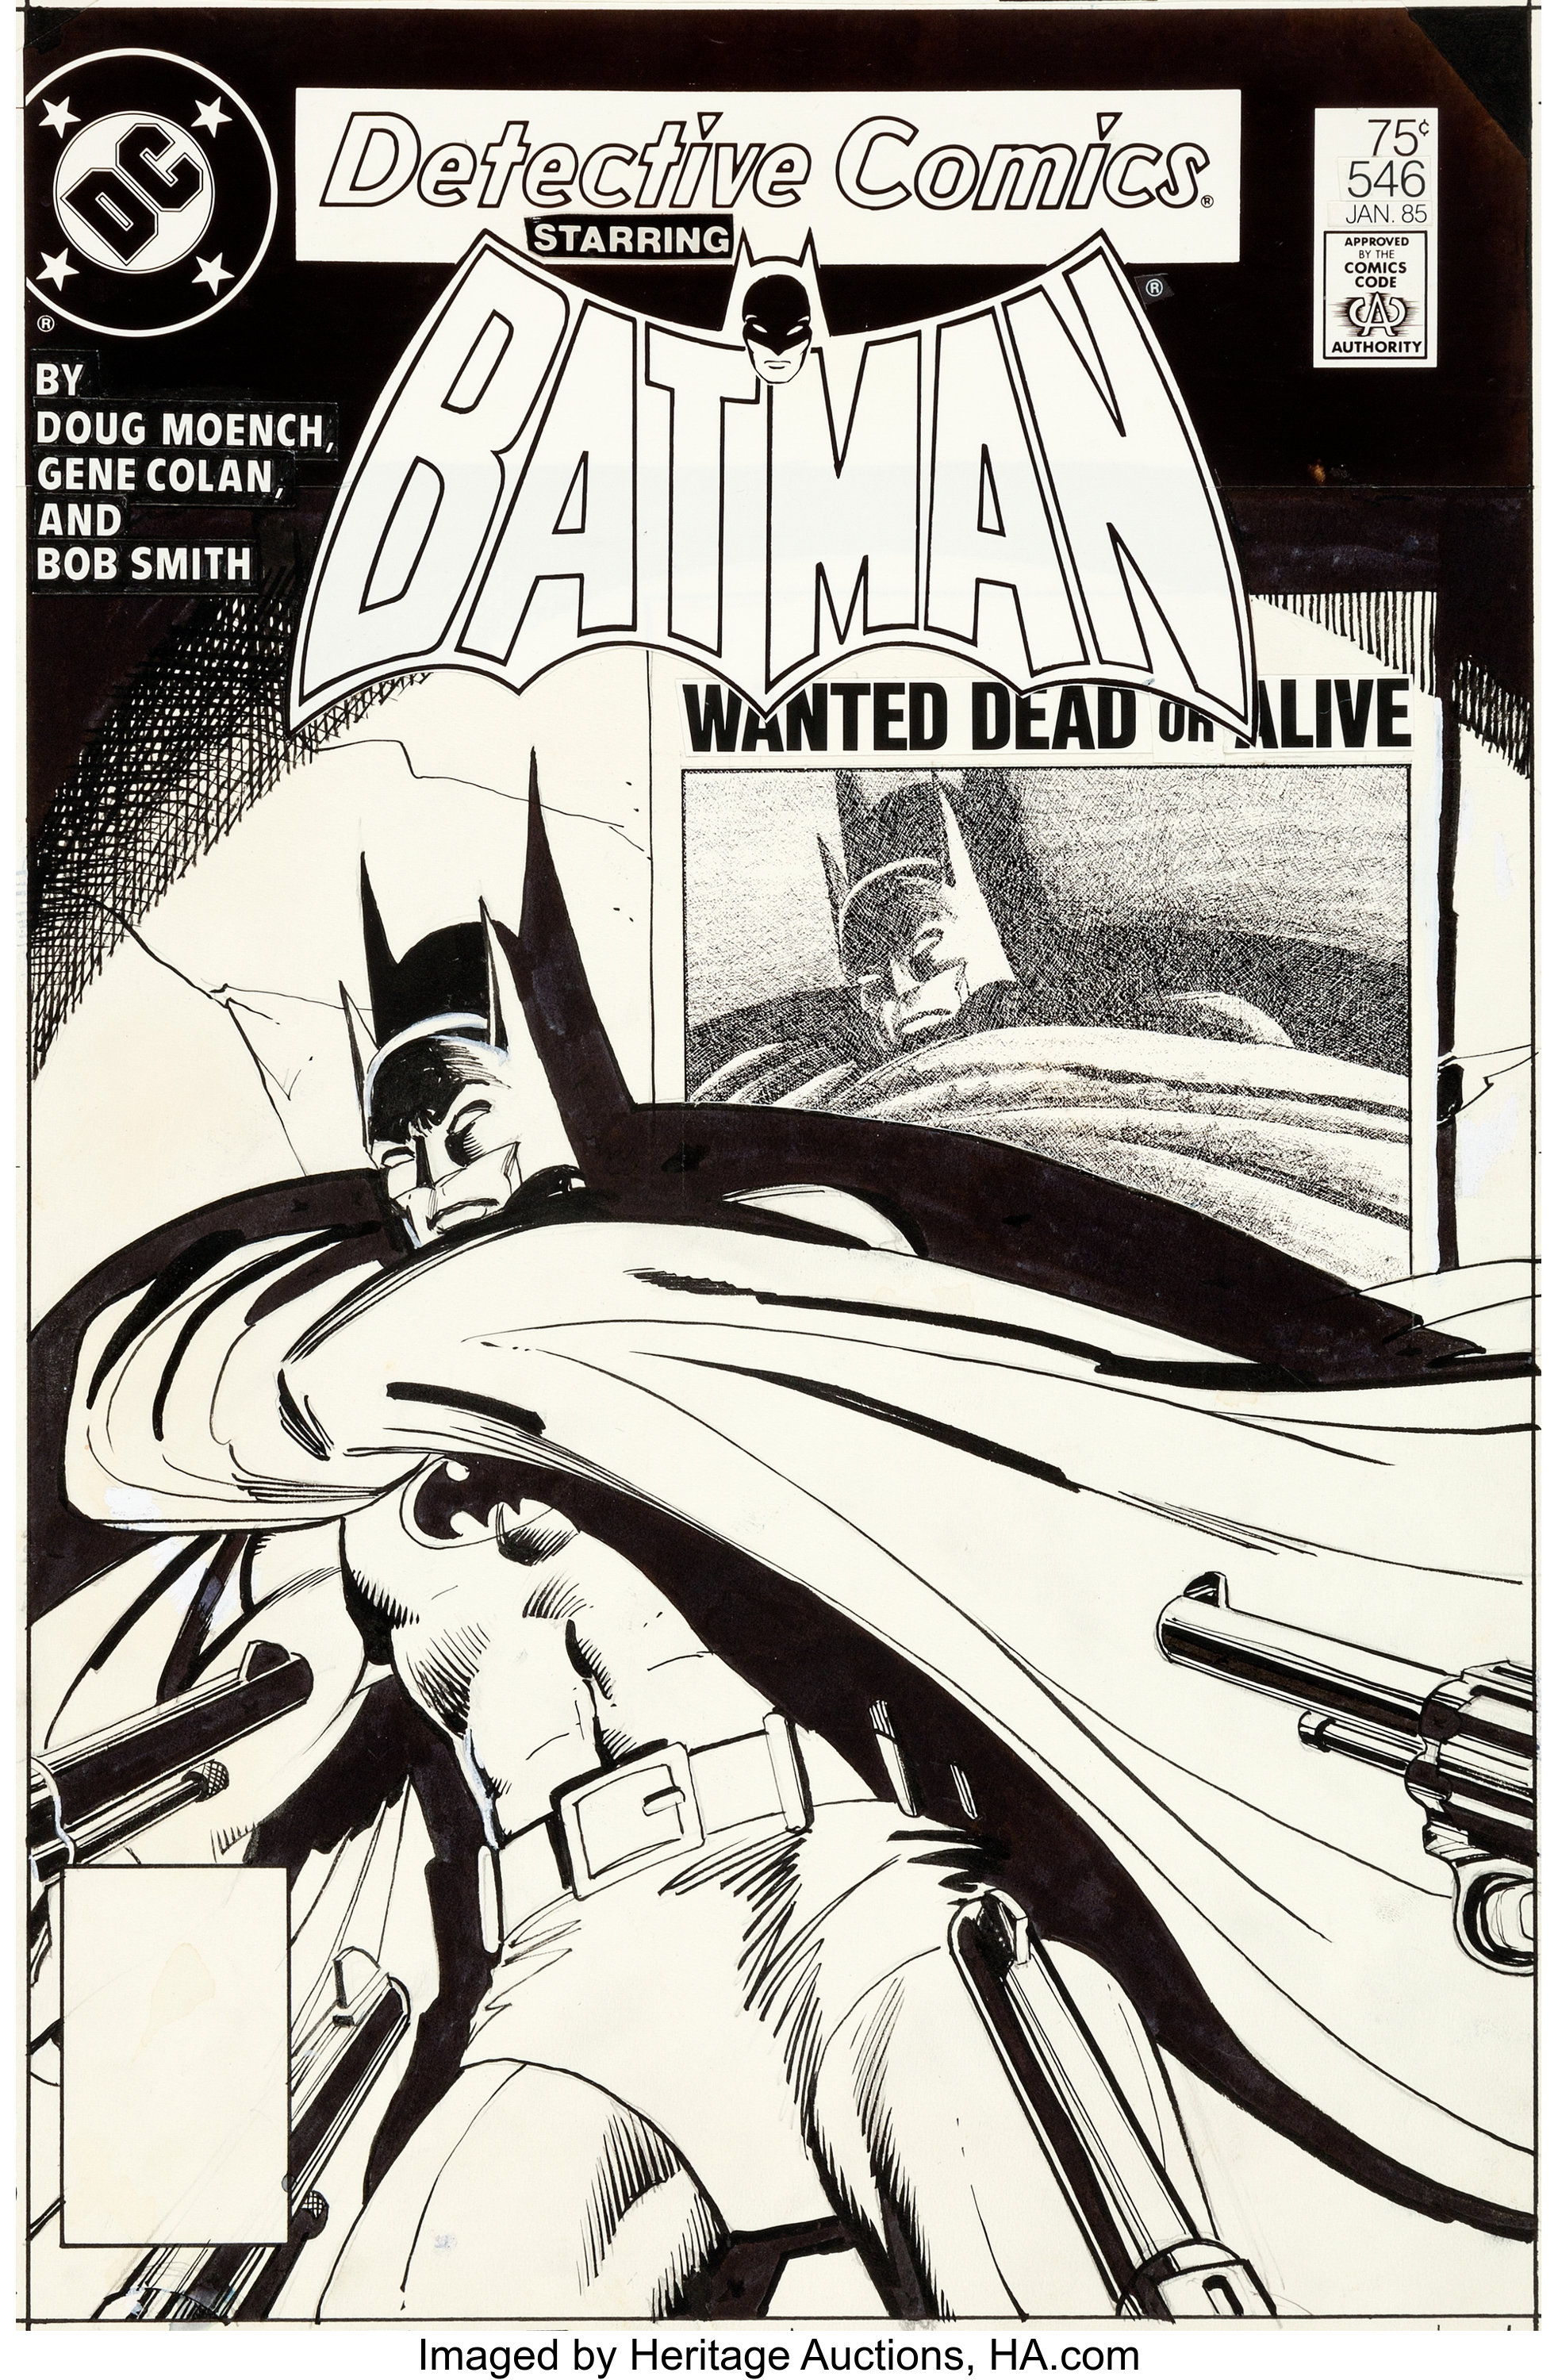 Dick Giordano Detective Comics #546 Cover Batman Original Art (DC, | Lot  #94075 | Heritage Auctions